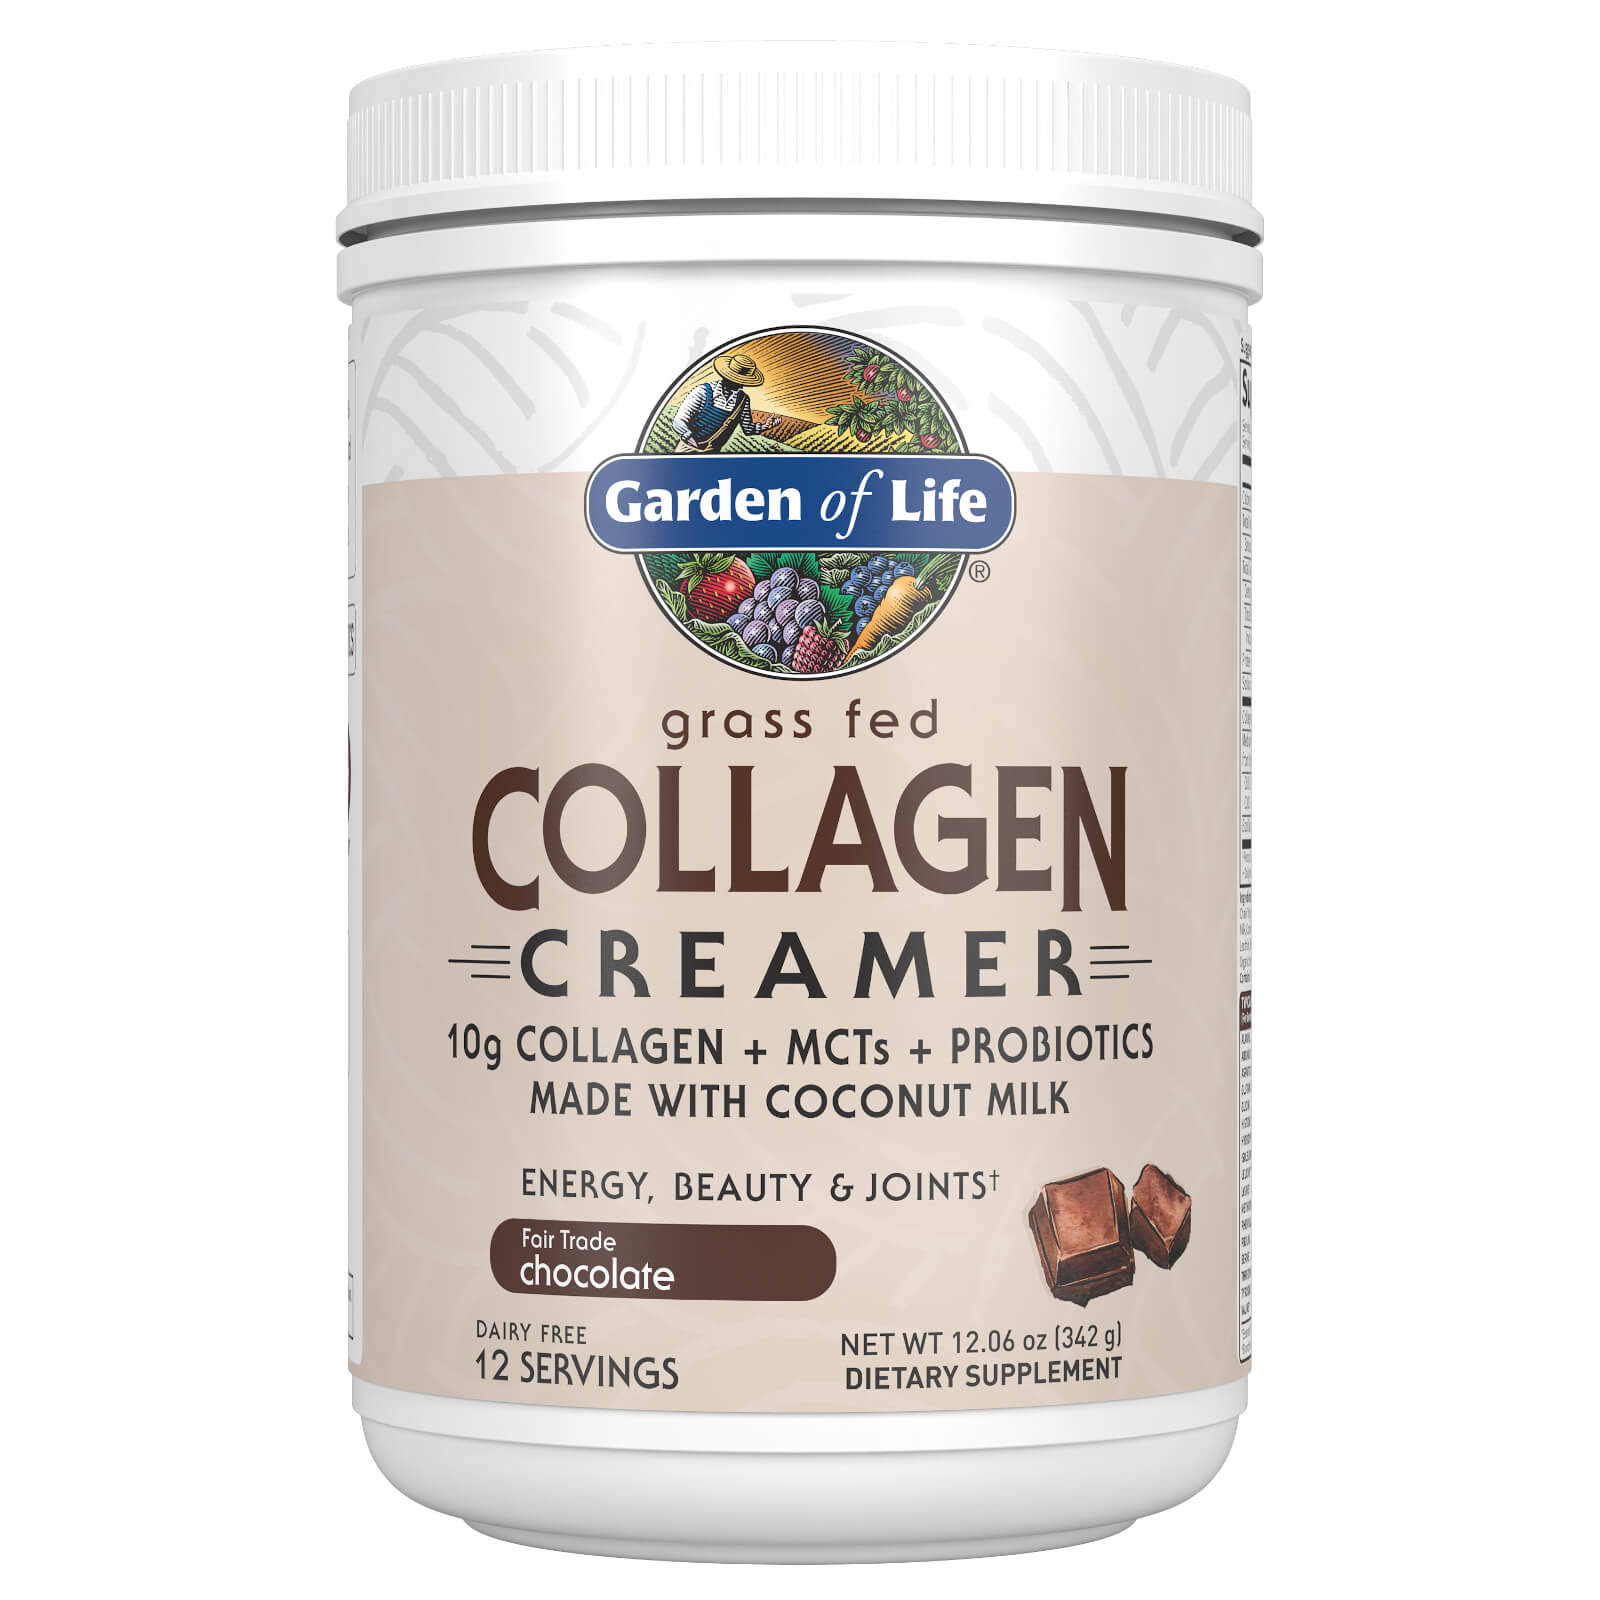 Garden of Life Chocolate Grass Fed Collagen Creamer